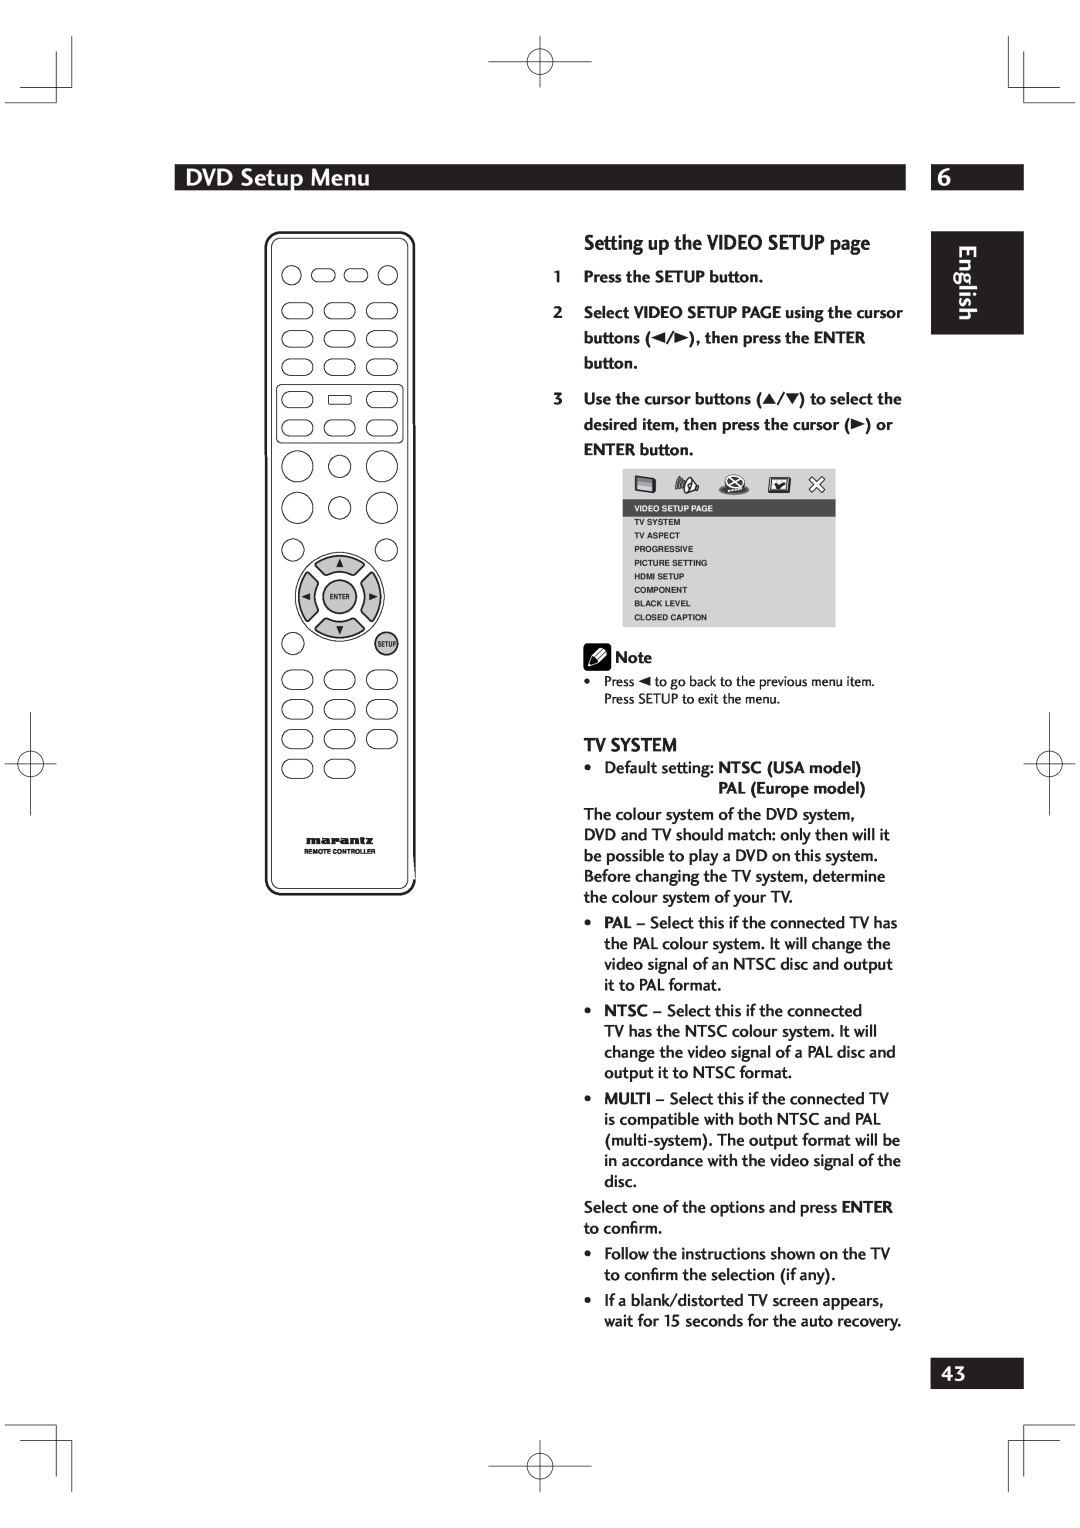 Marantz VC6001 manual Setting up the VIDEO SETUP page, Tv System, PAL Europe model, DVD Setup Menu, English, ENTER button 